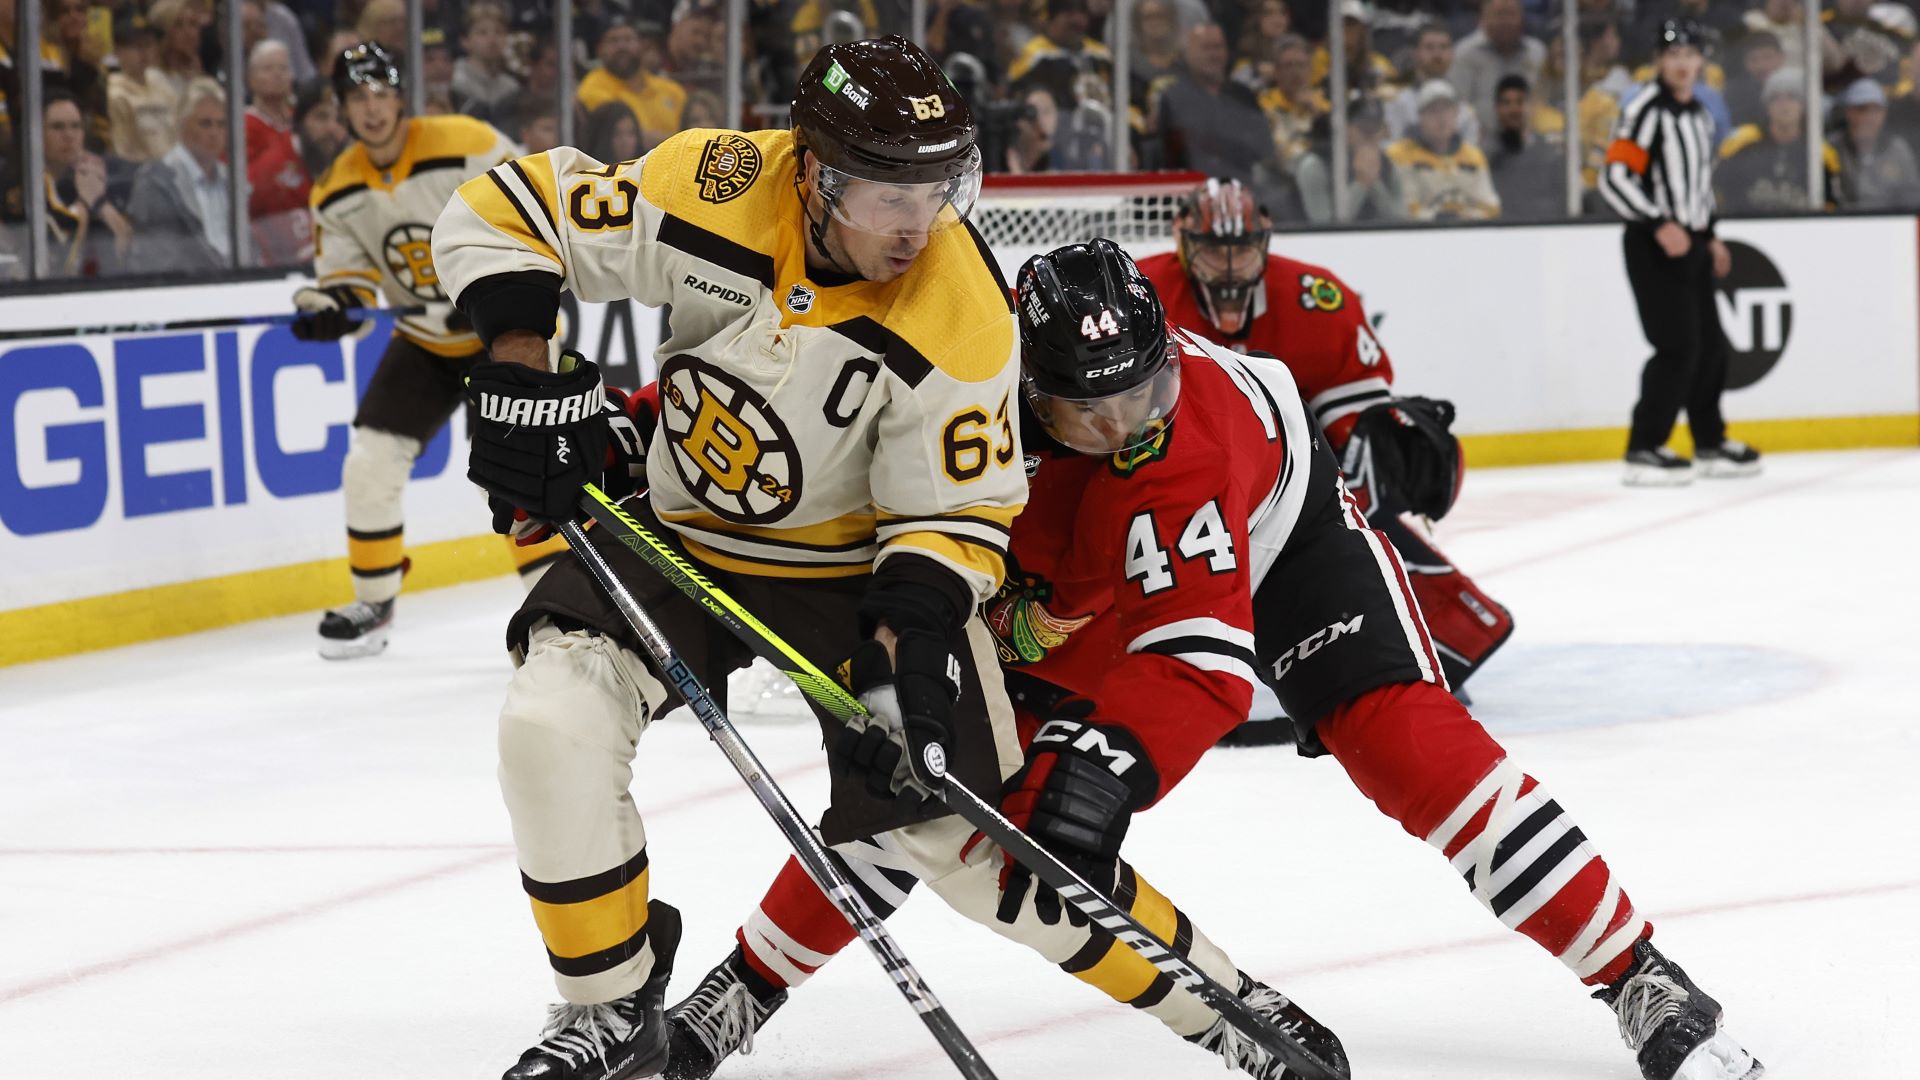 Boston Bruins vs. New Jersey Devils 10/3/22 - NHL Live Stream on Watch ESPN